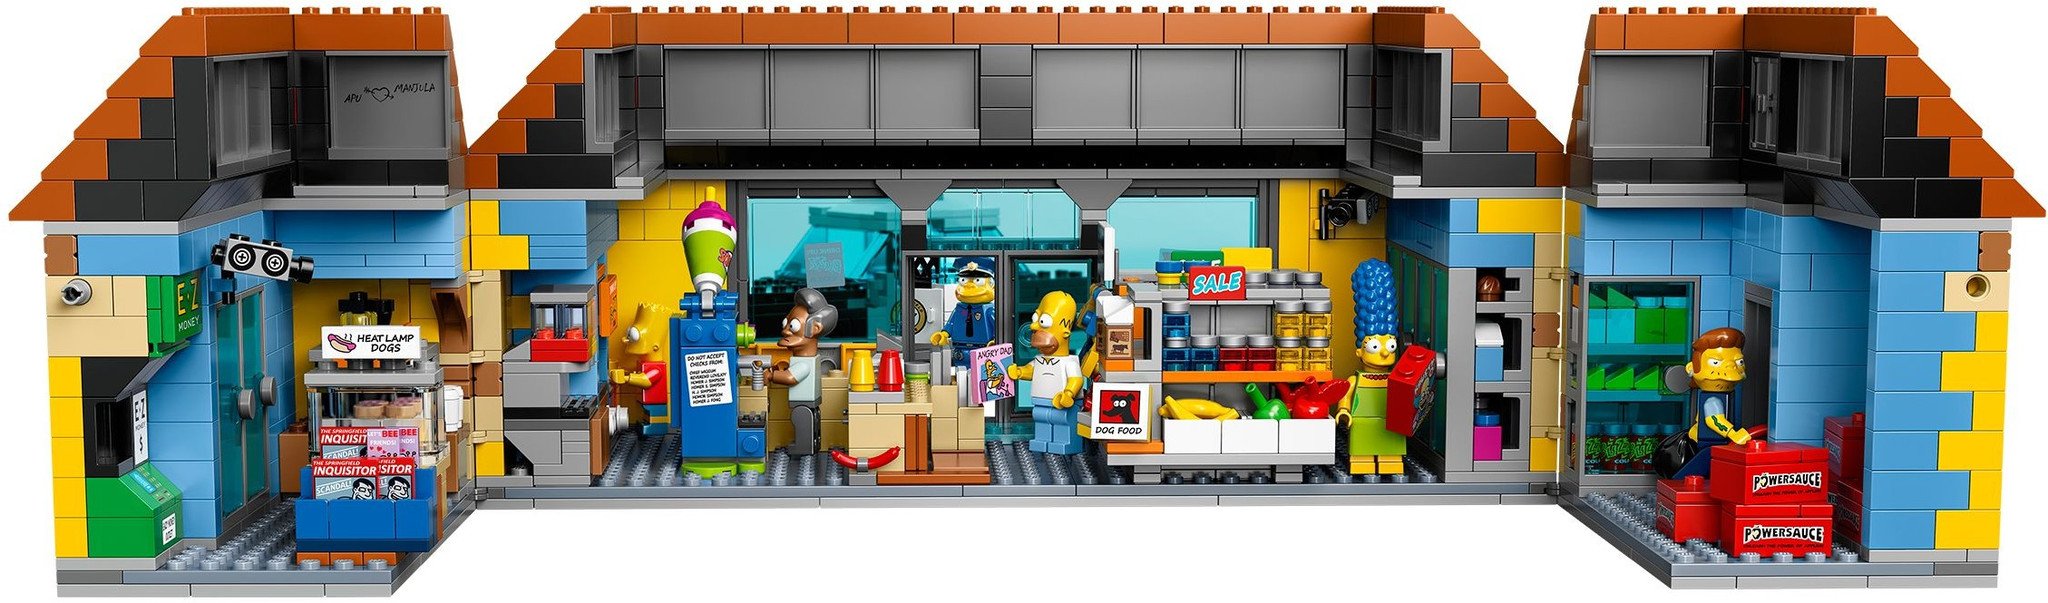 Simpsons Lego Kwik E Mart Display Base & Case Acrylic Box Perspex Model  71016 